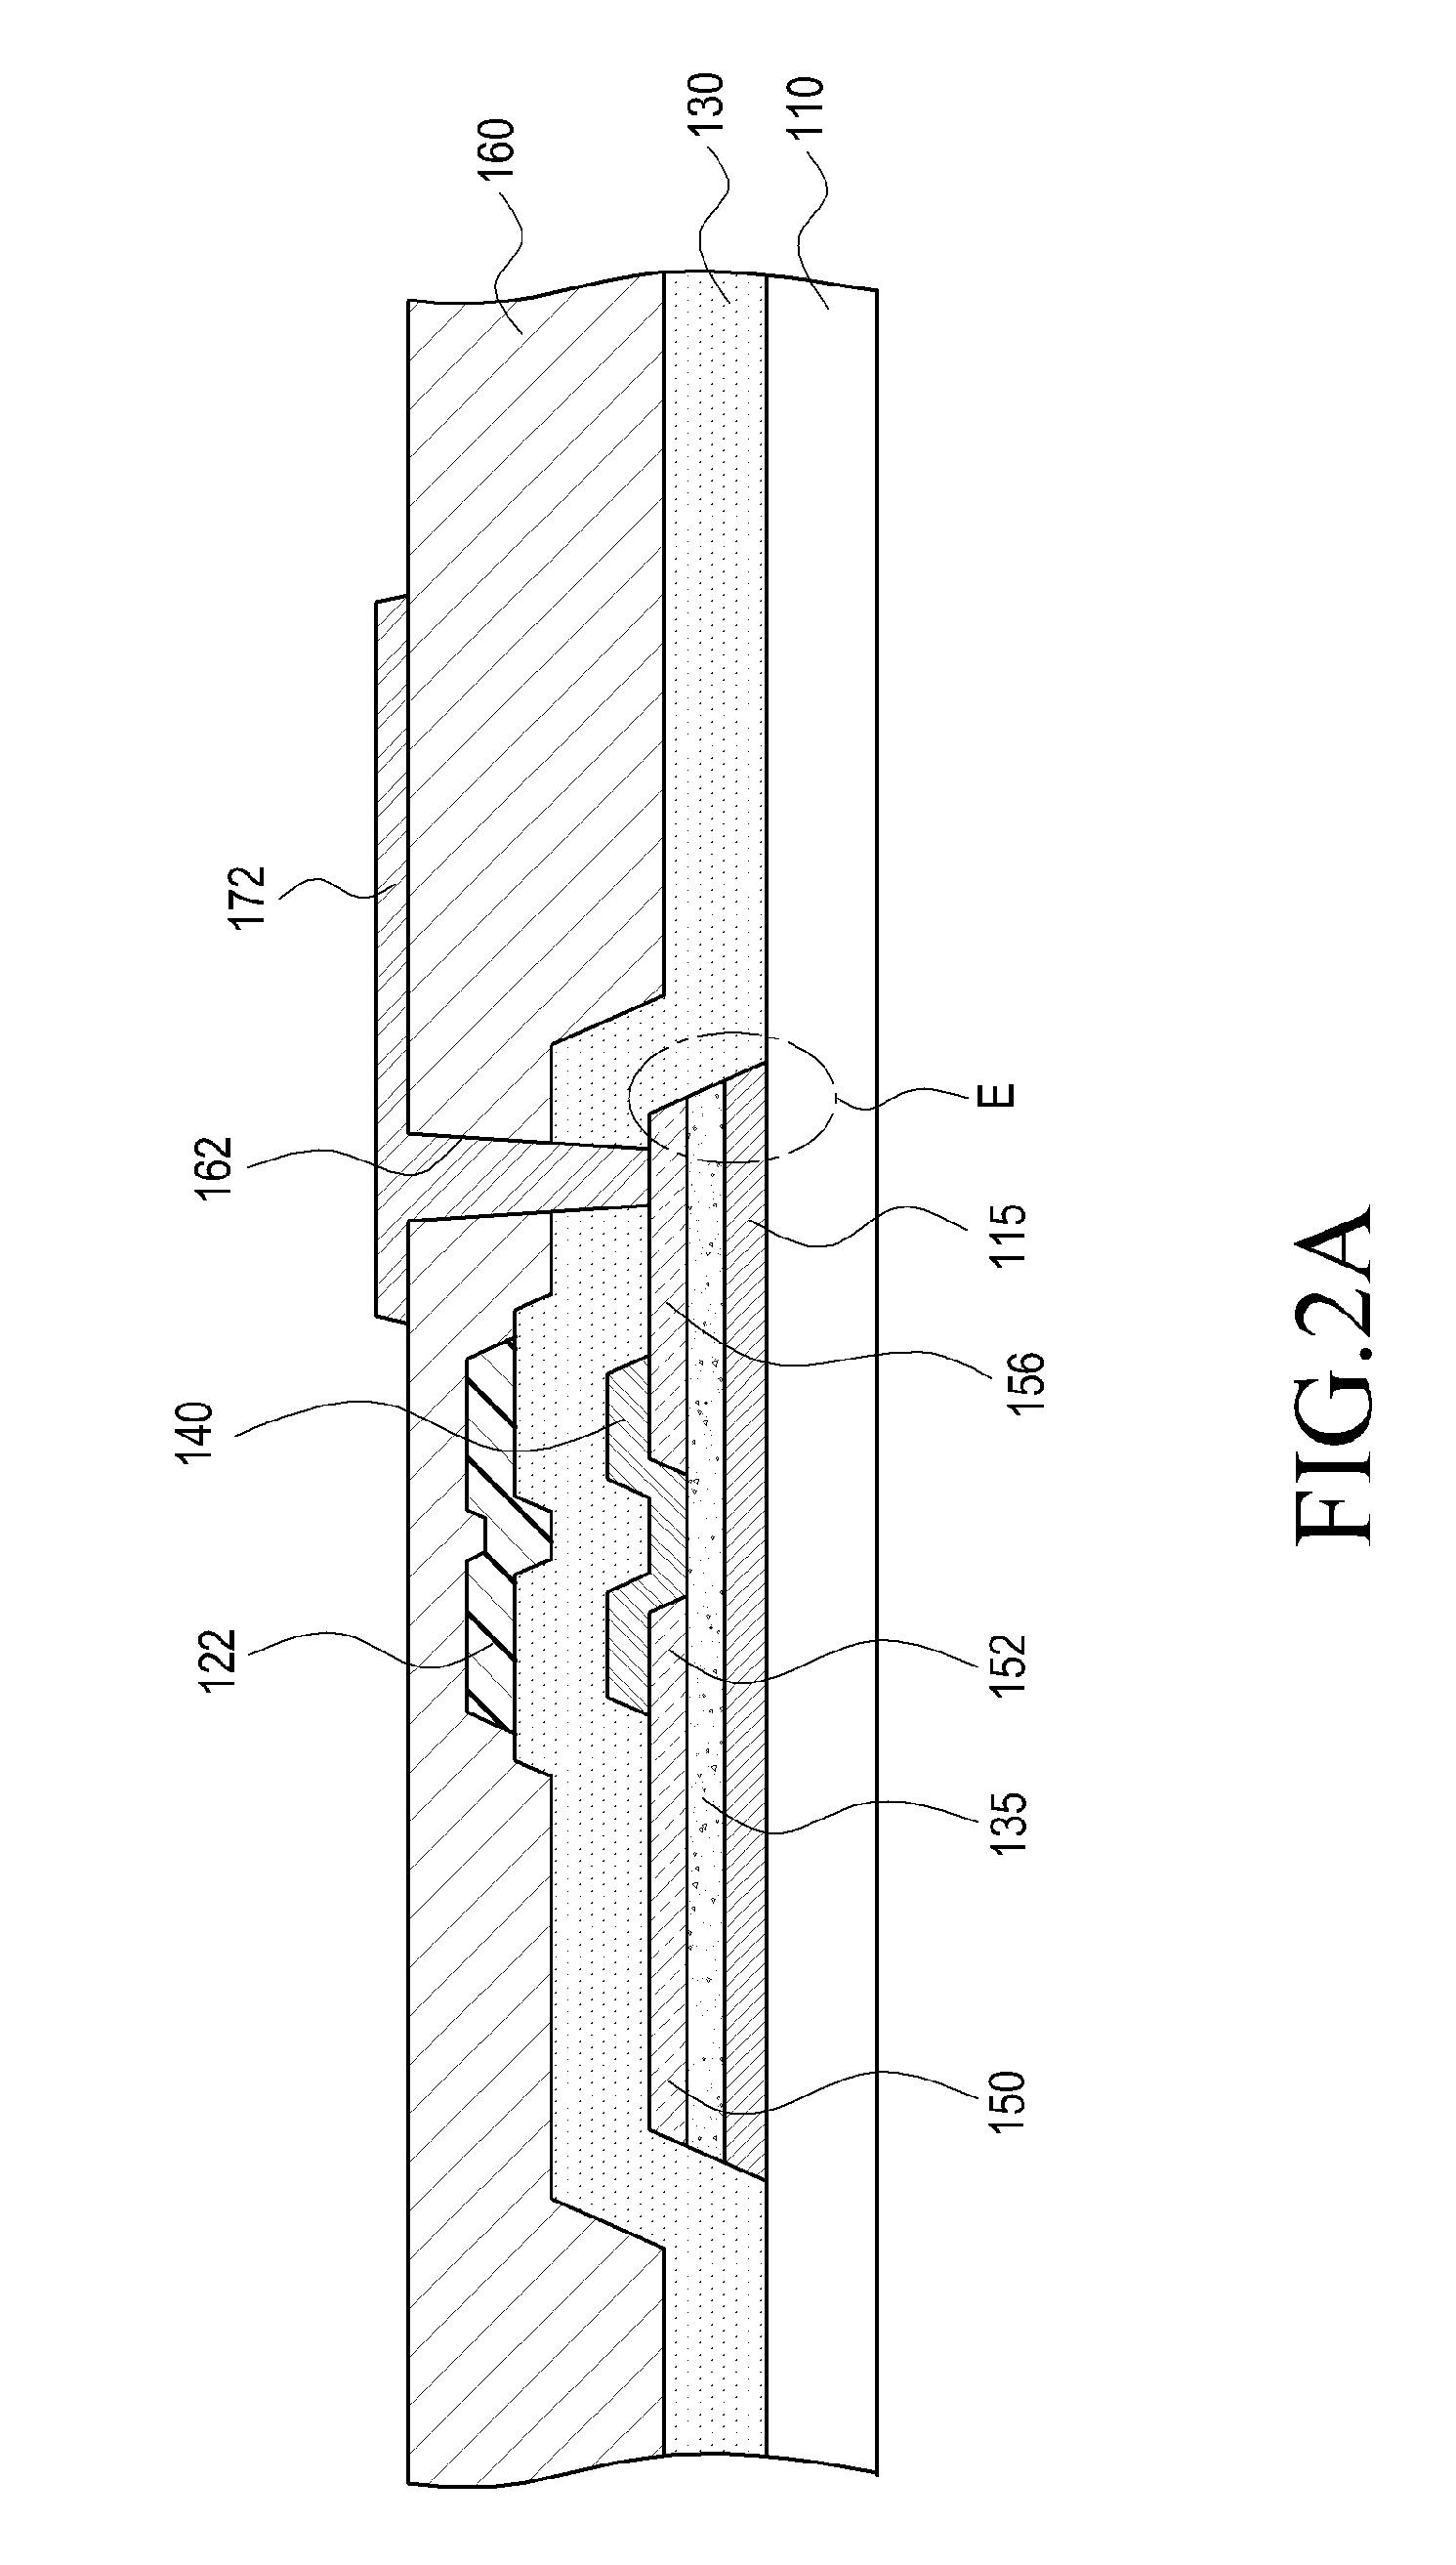 Thin film transistor panel and fabricating method thereof